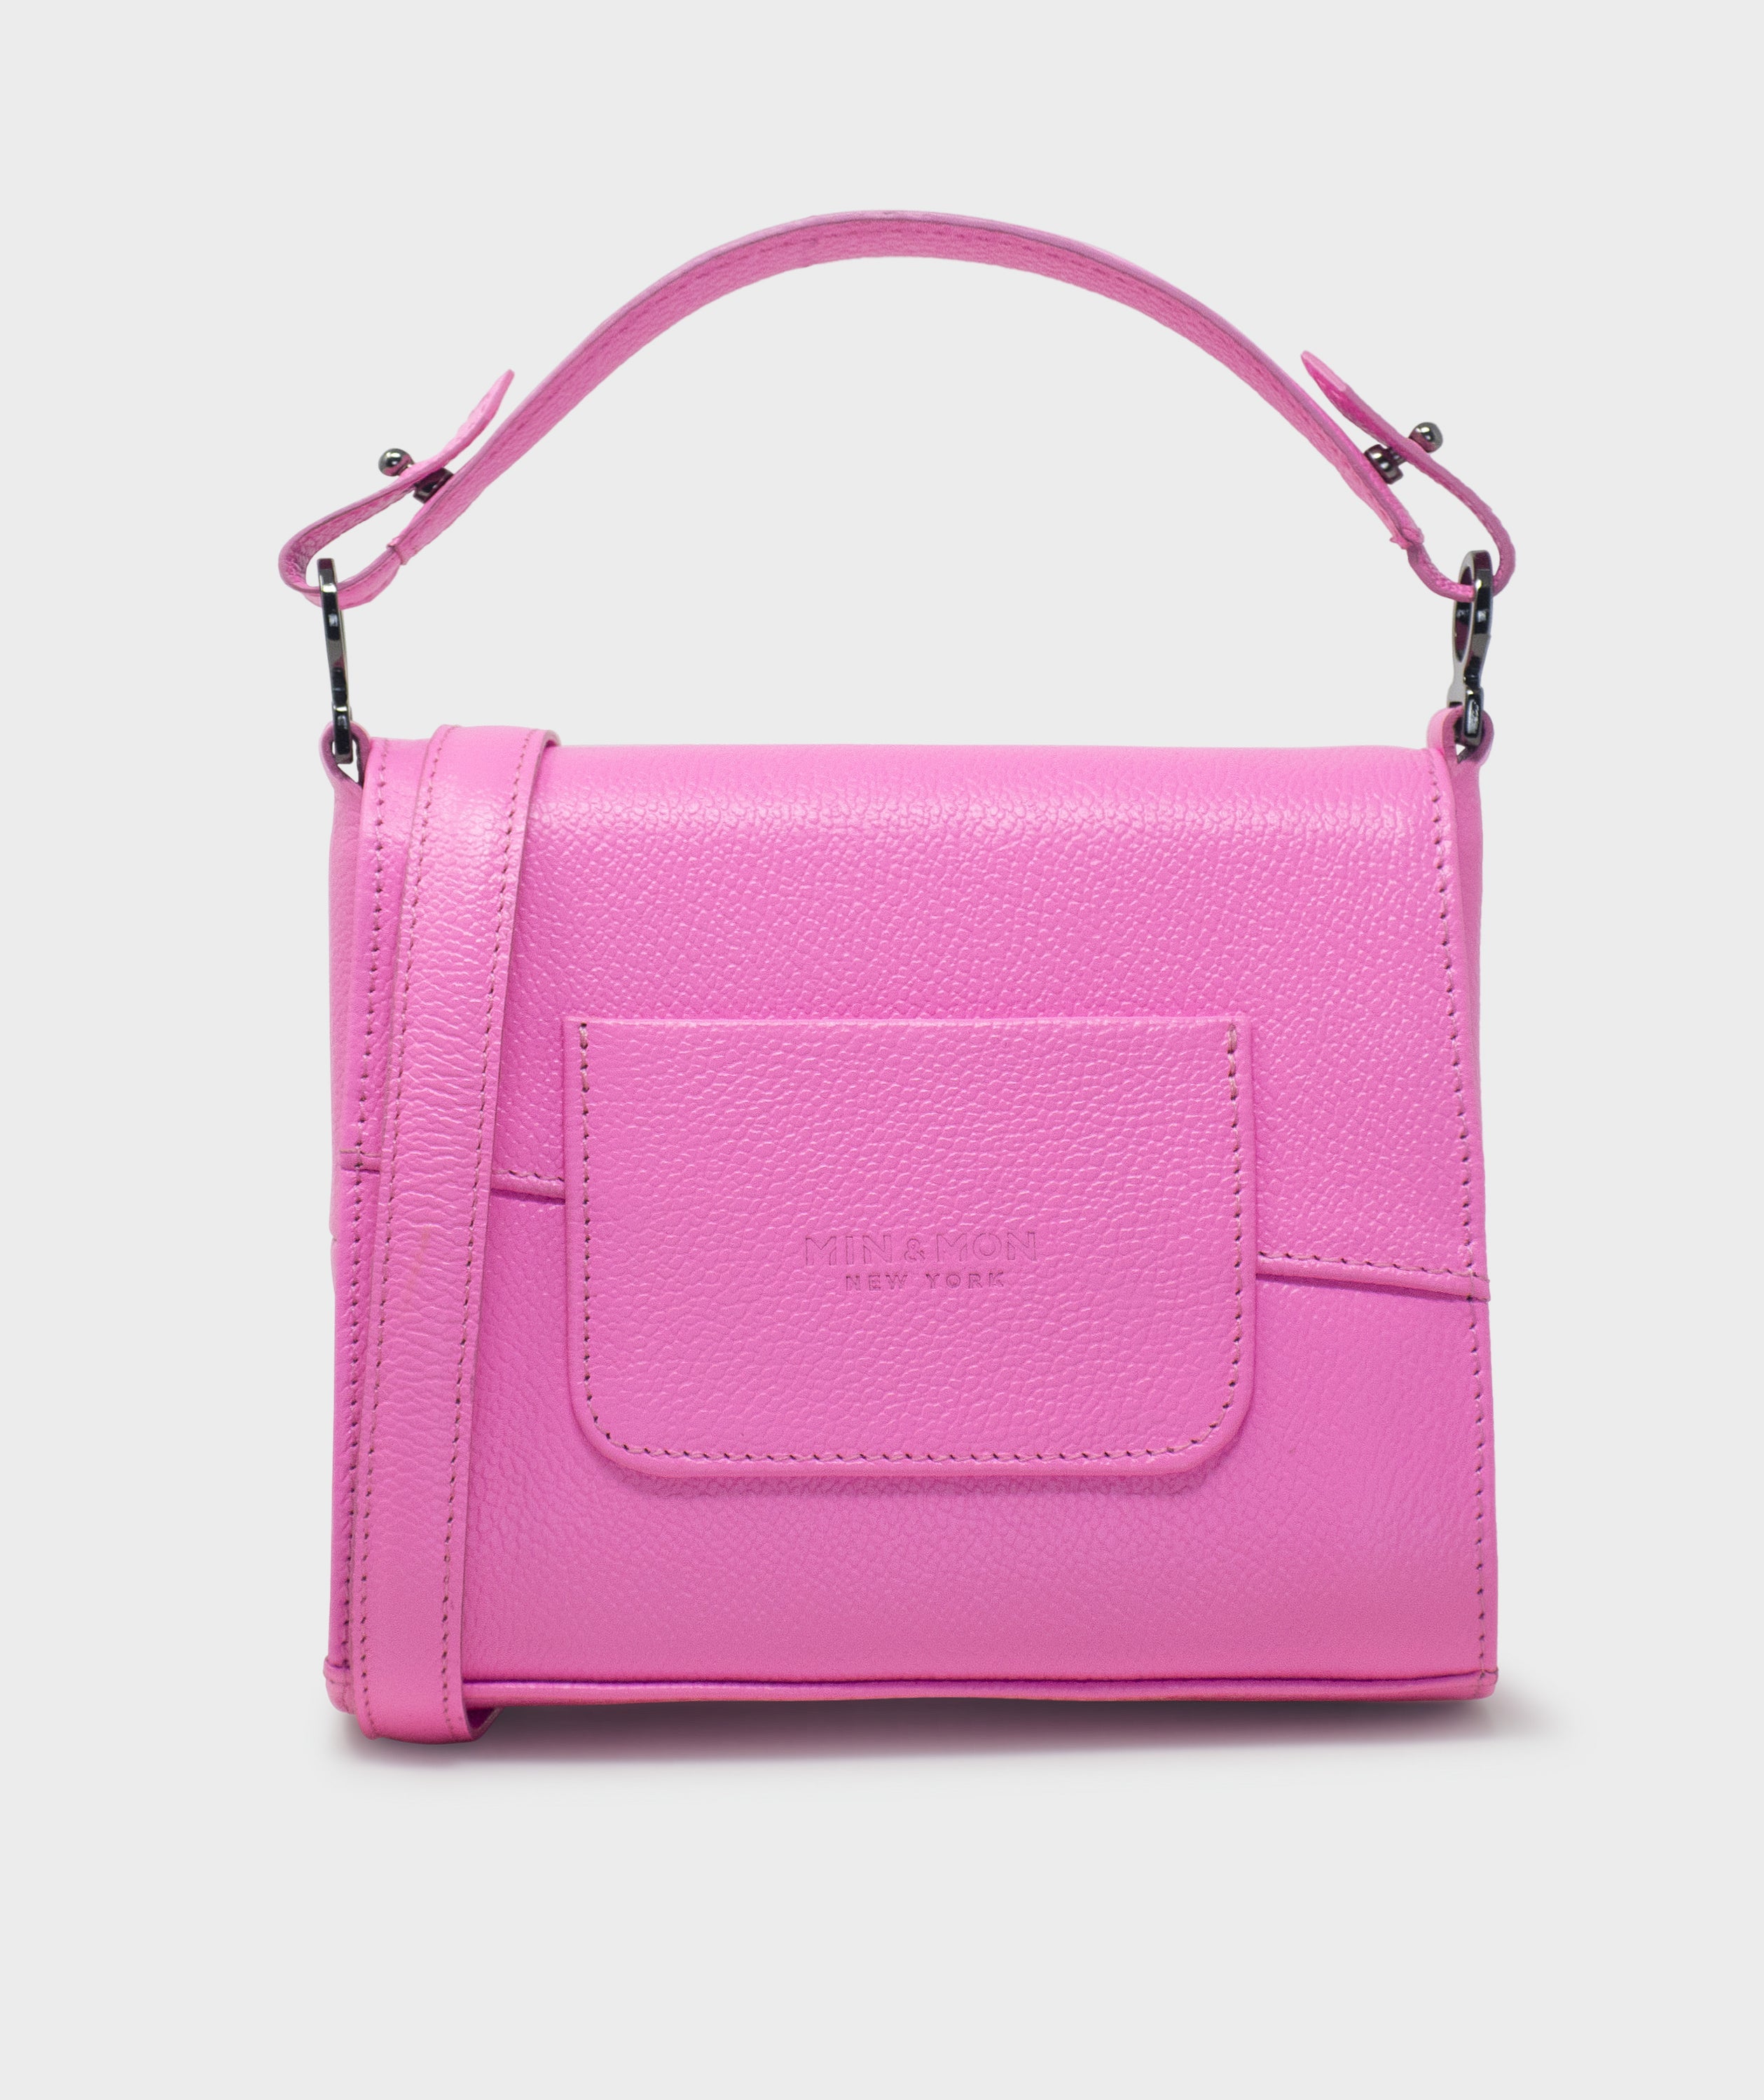 Anastasio Micro Crossbody Handbag Bubblegum Pink Leather - Eyes Embroidery - Back view